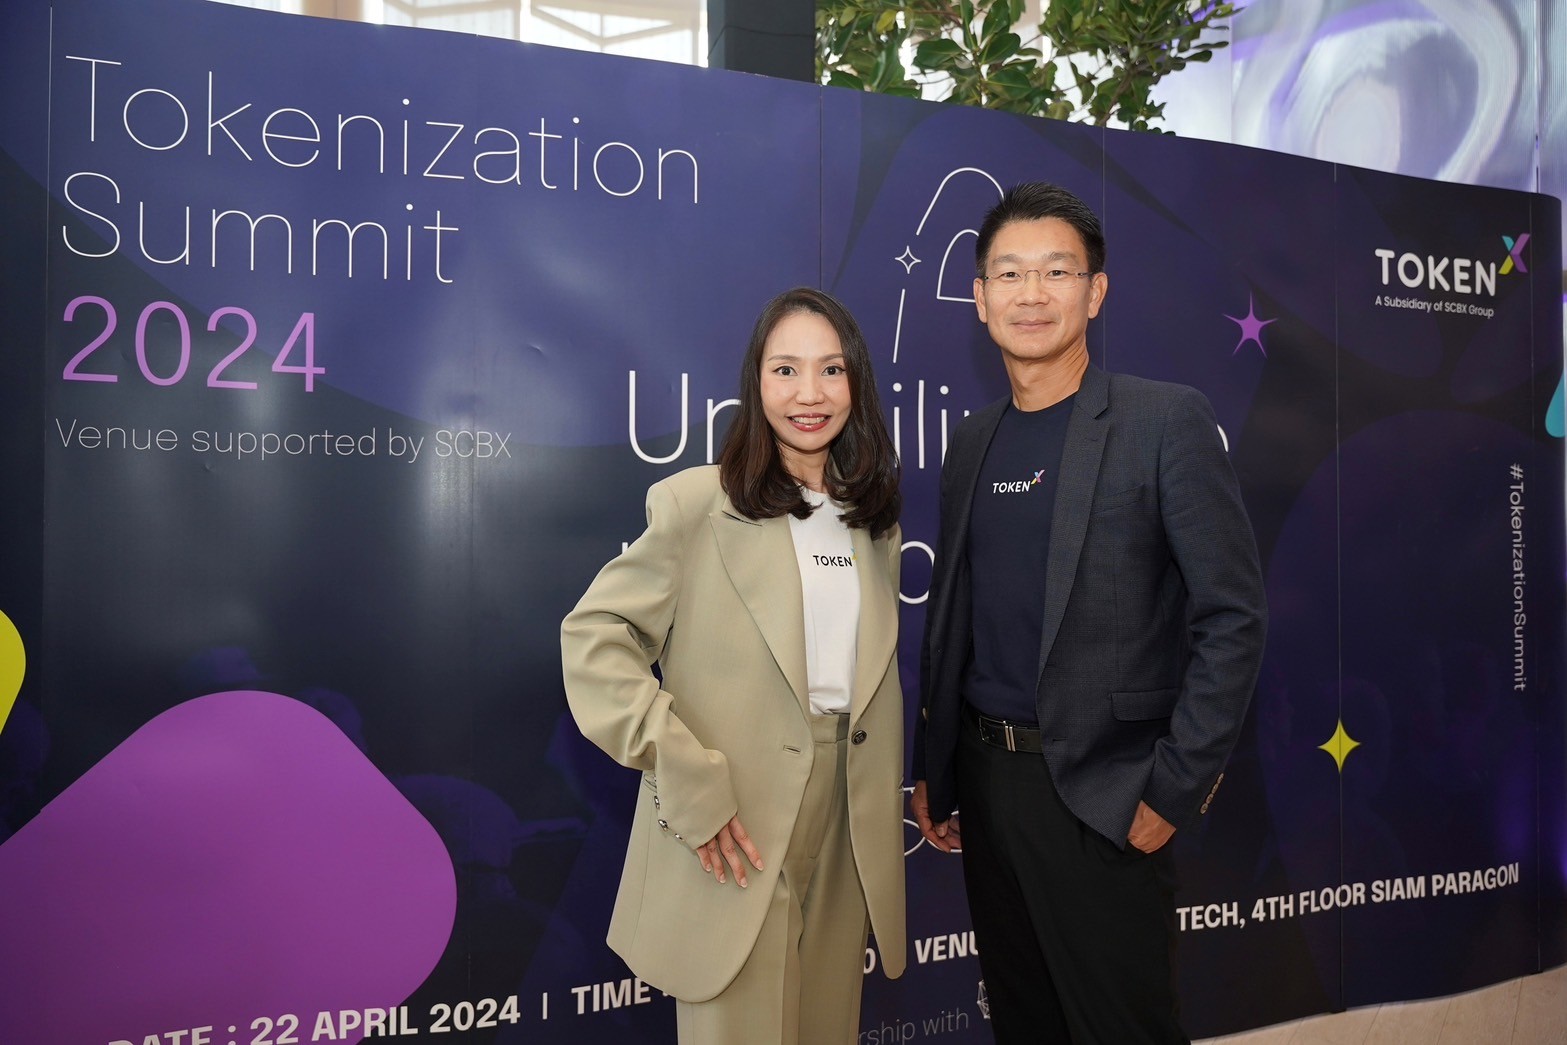 Token X เปิดเวที "Tokenization Summit 2024 by Token X"   